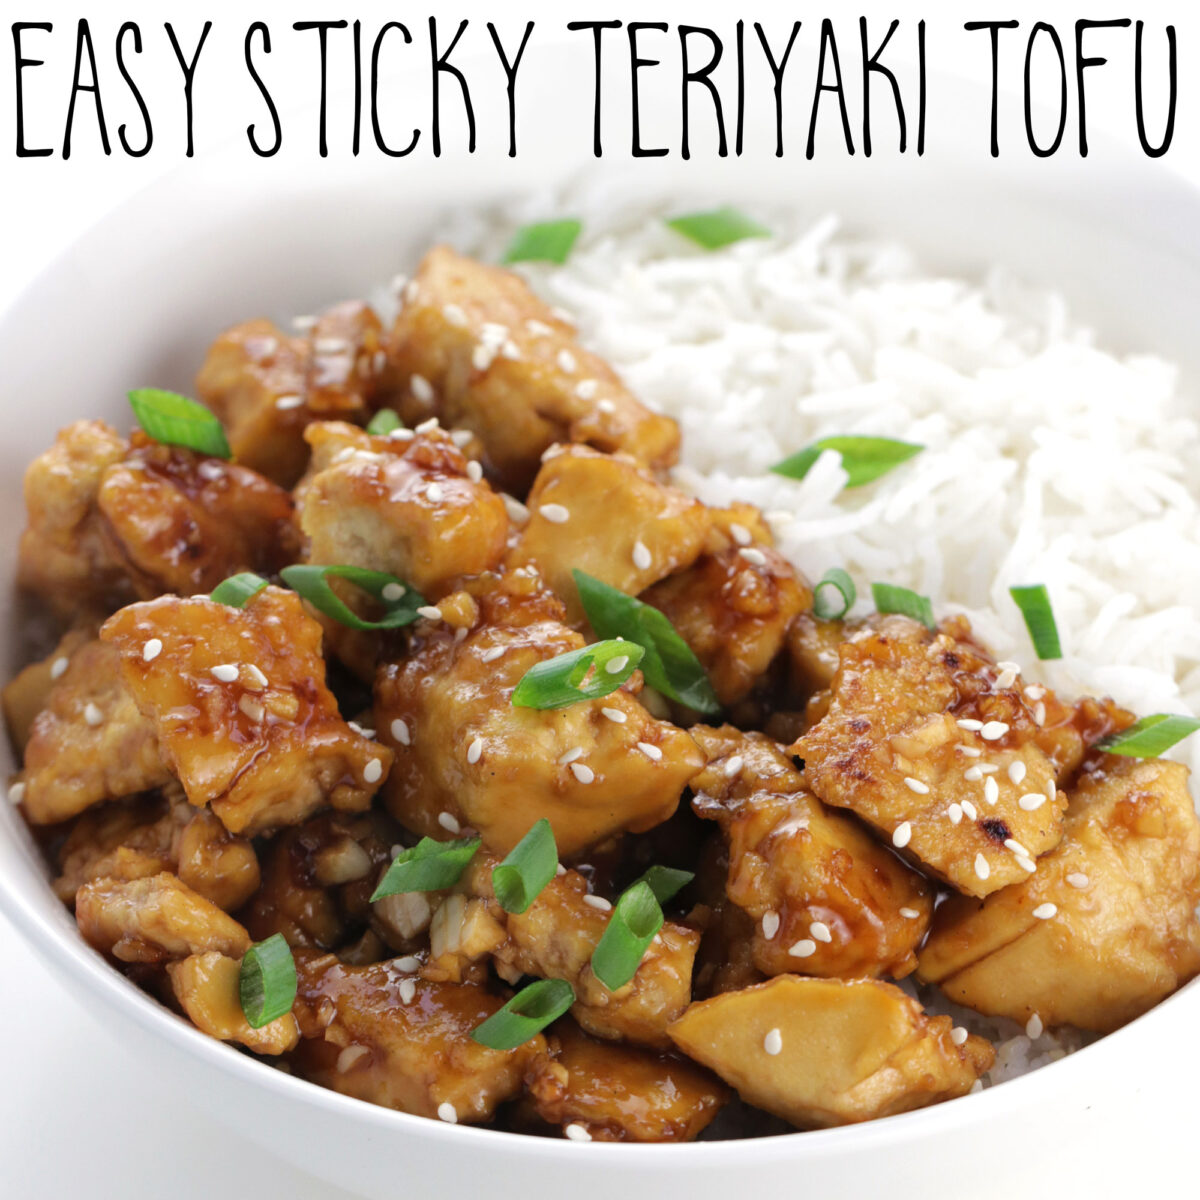 Easy Sticky Teriyaki Tofu